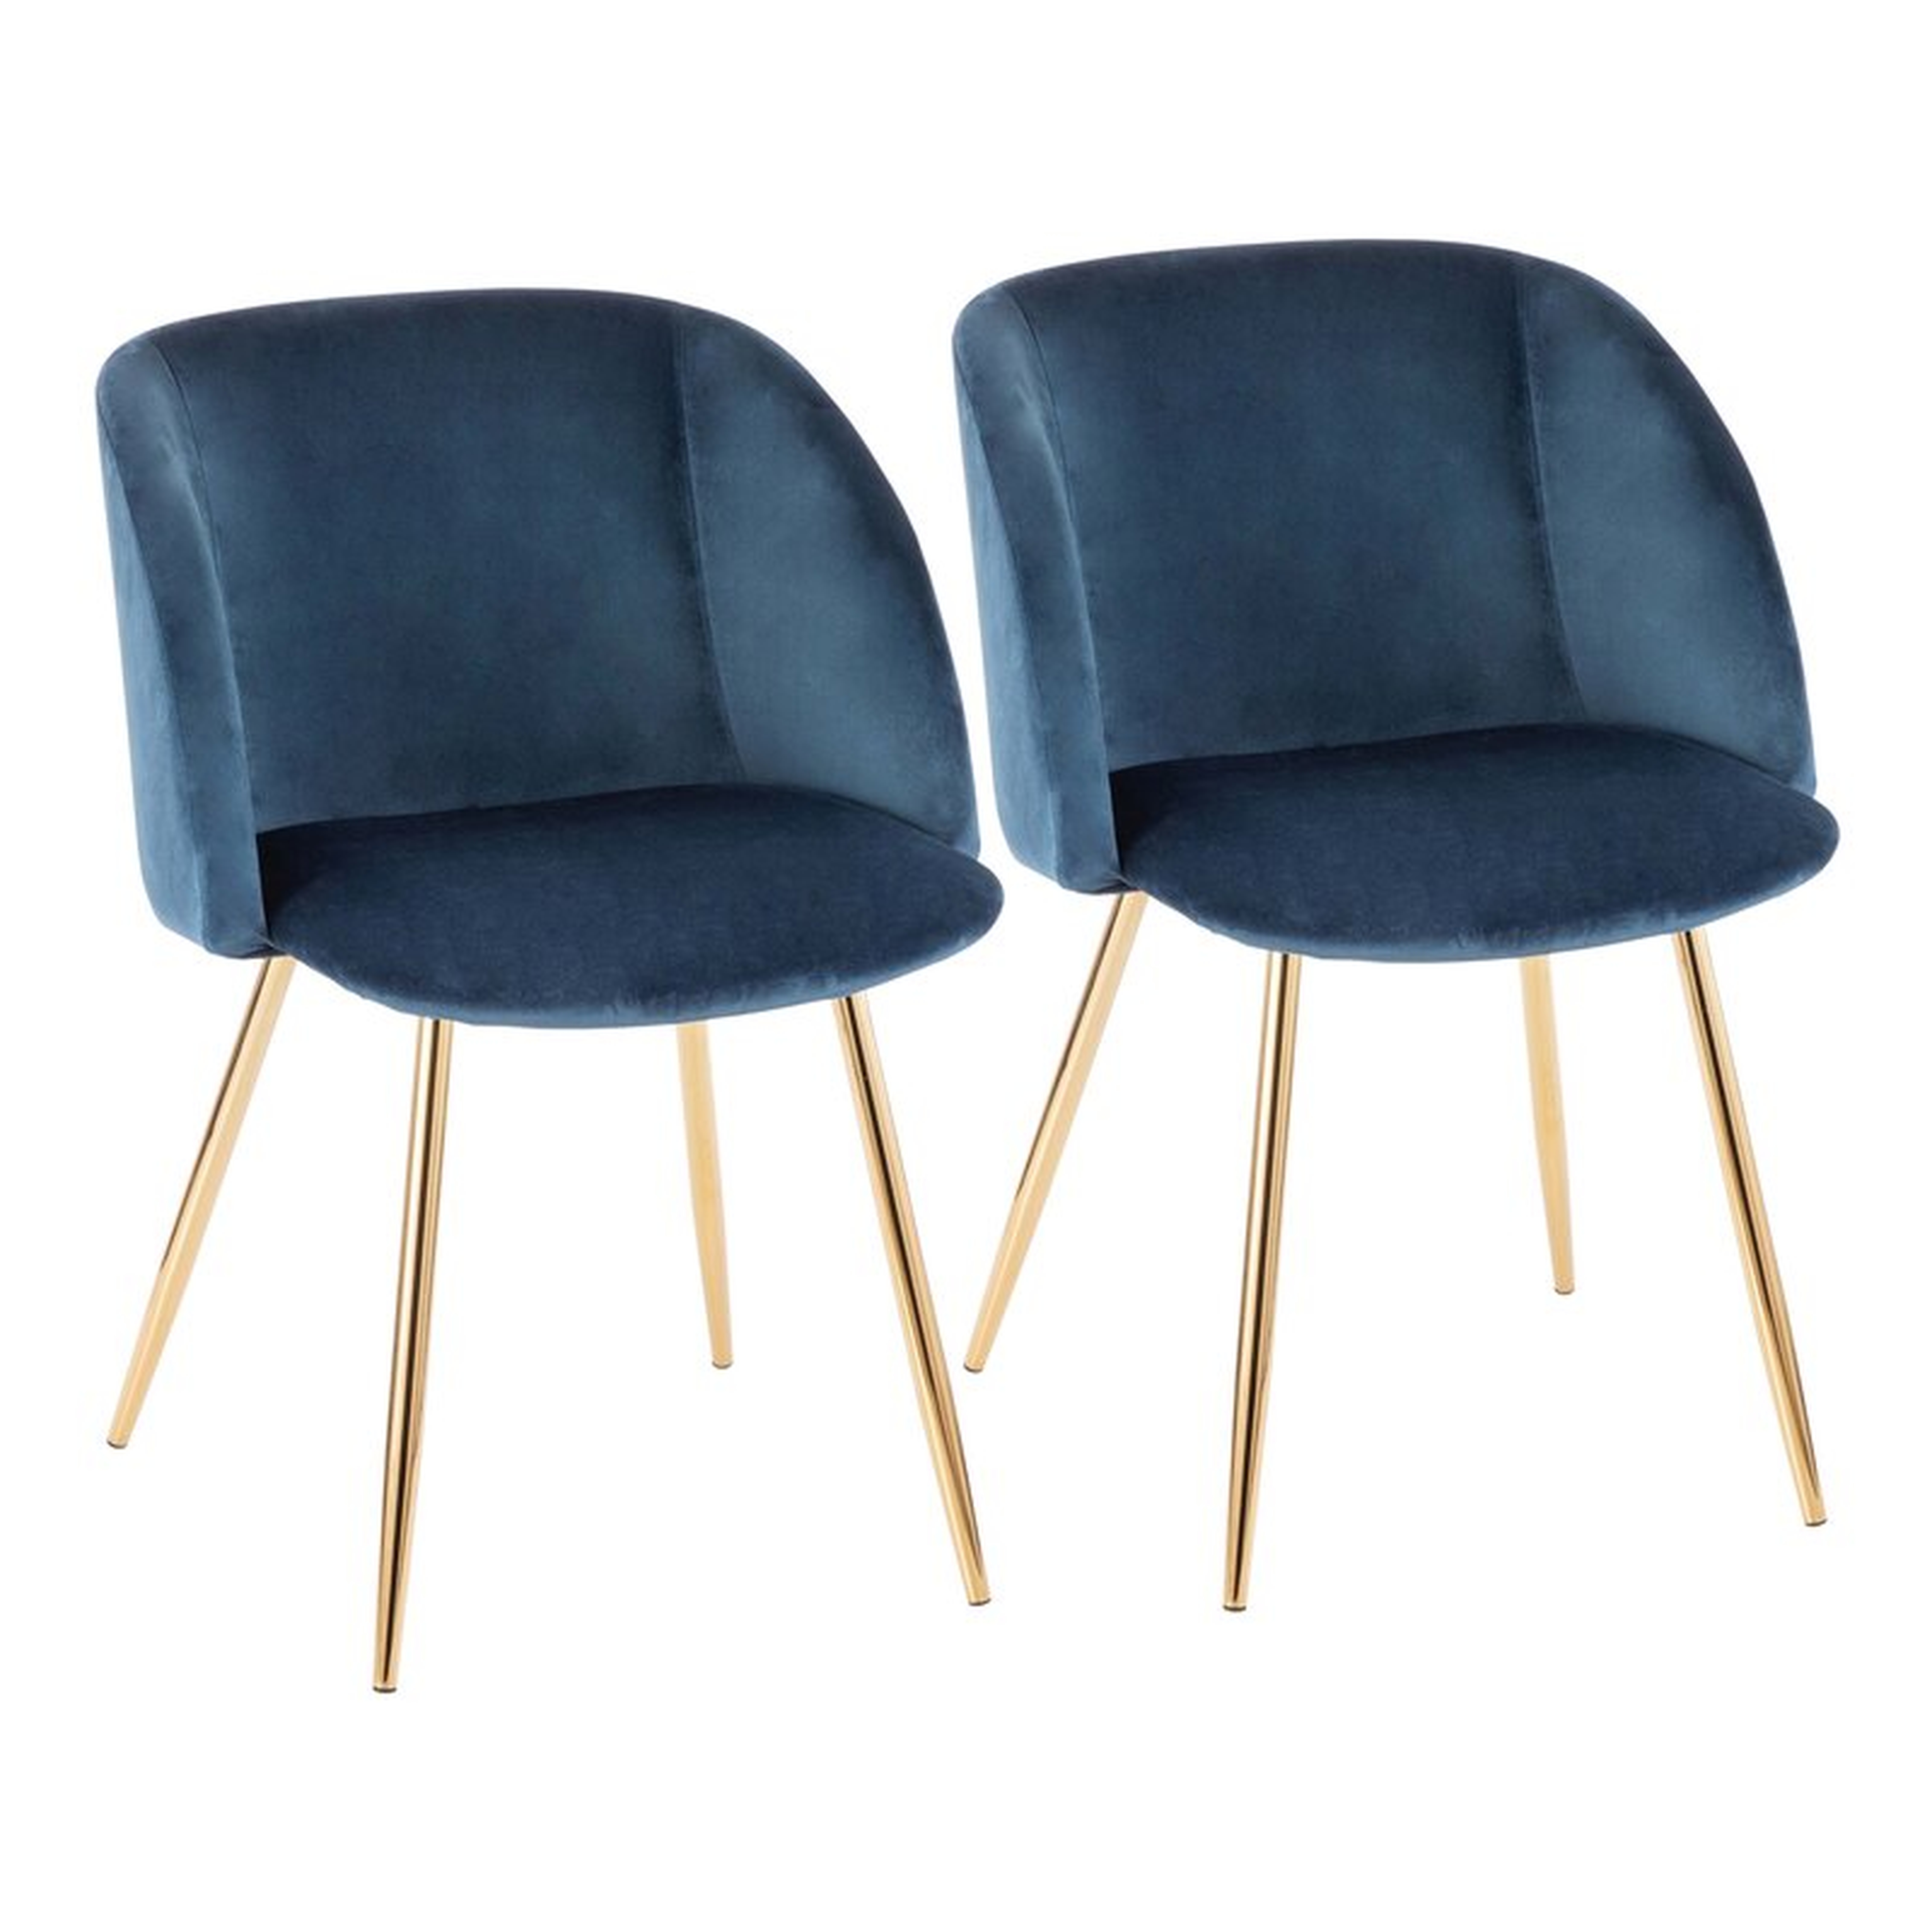 Corinne Upholstered Dining Chair - Blue, set of 2 - Wayfair